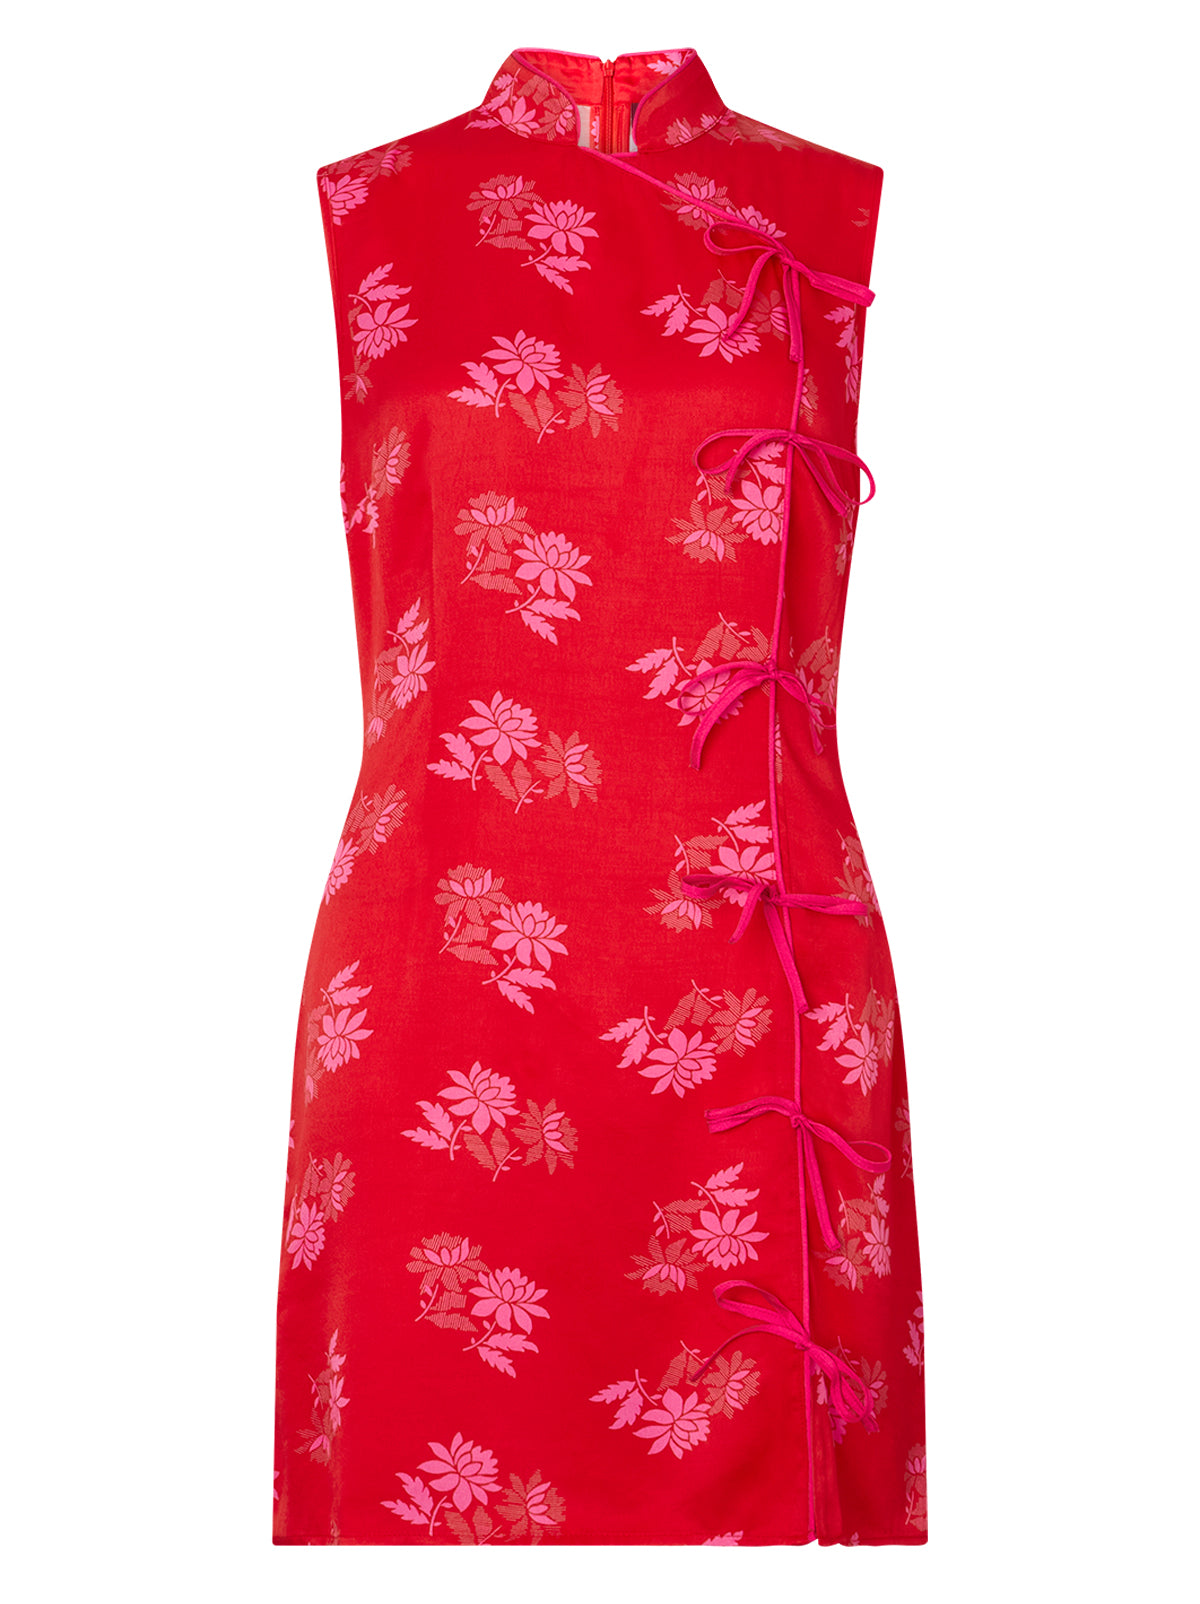 Aubrey Red Floral Mini Dress By KITRI Studio